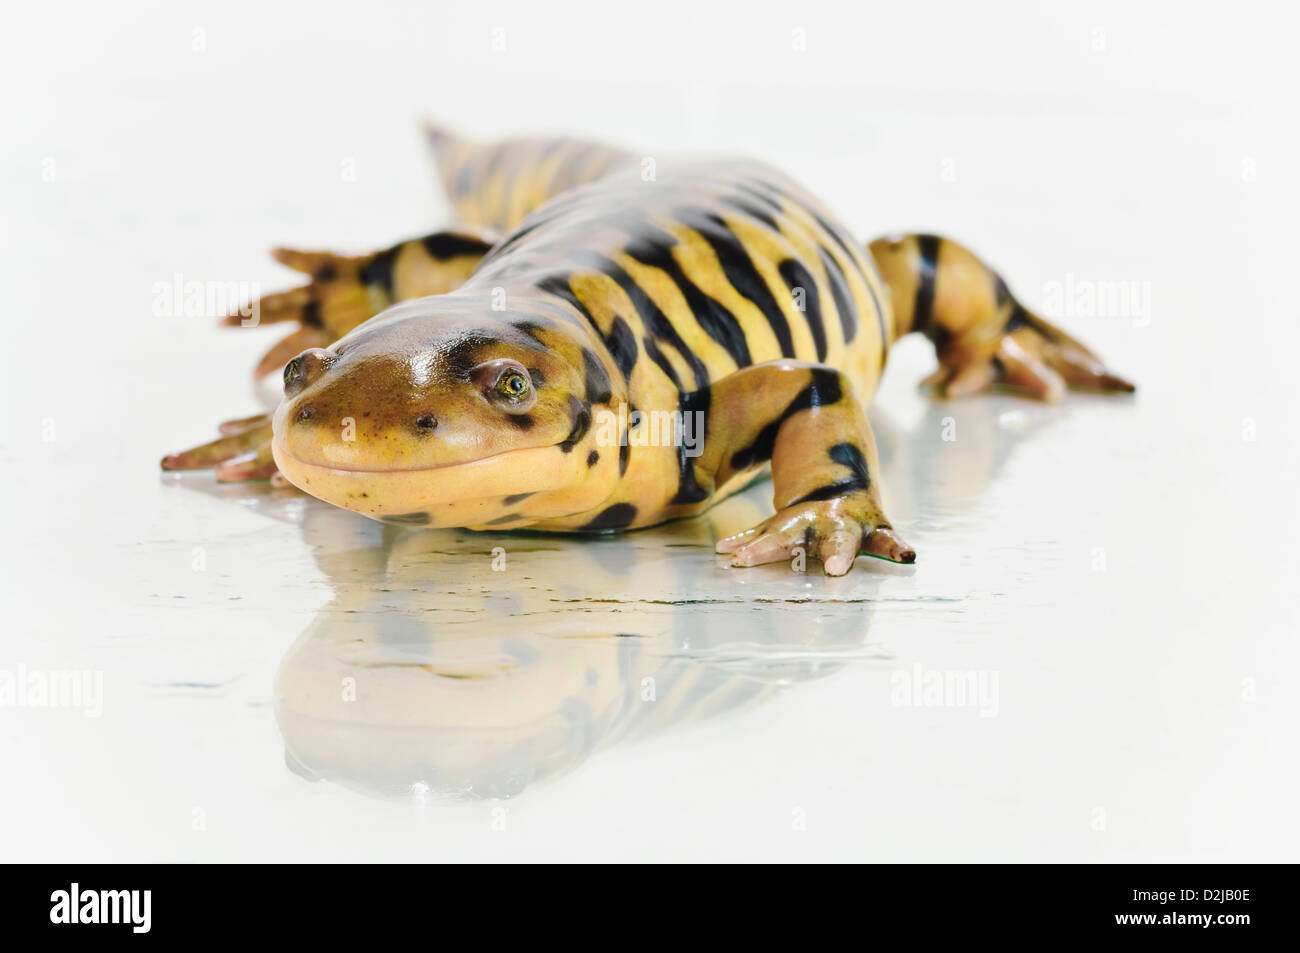 Tiger salamander on white background; alberta canada Stock Photo